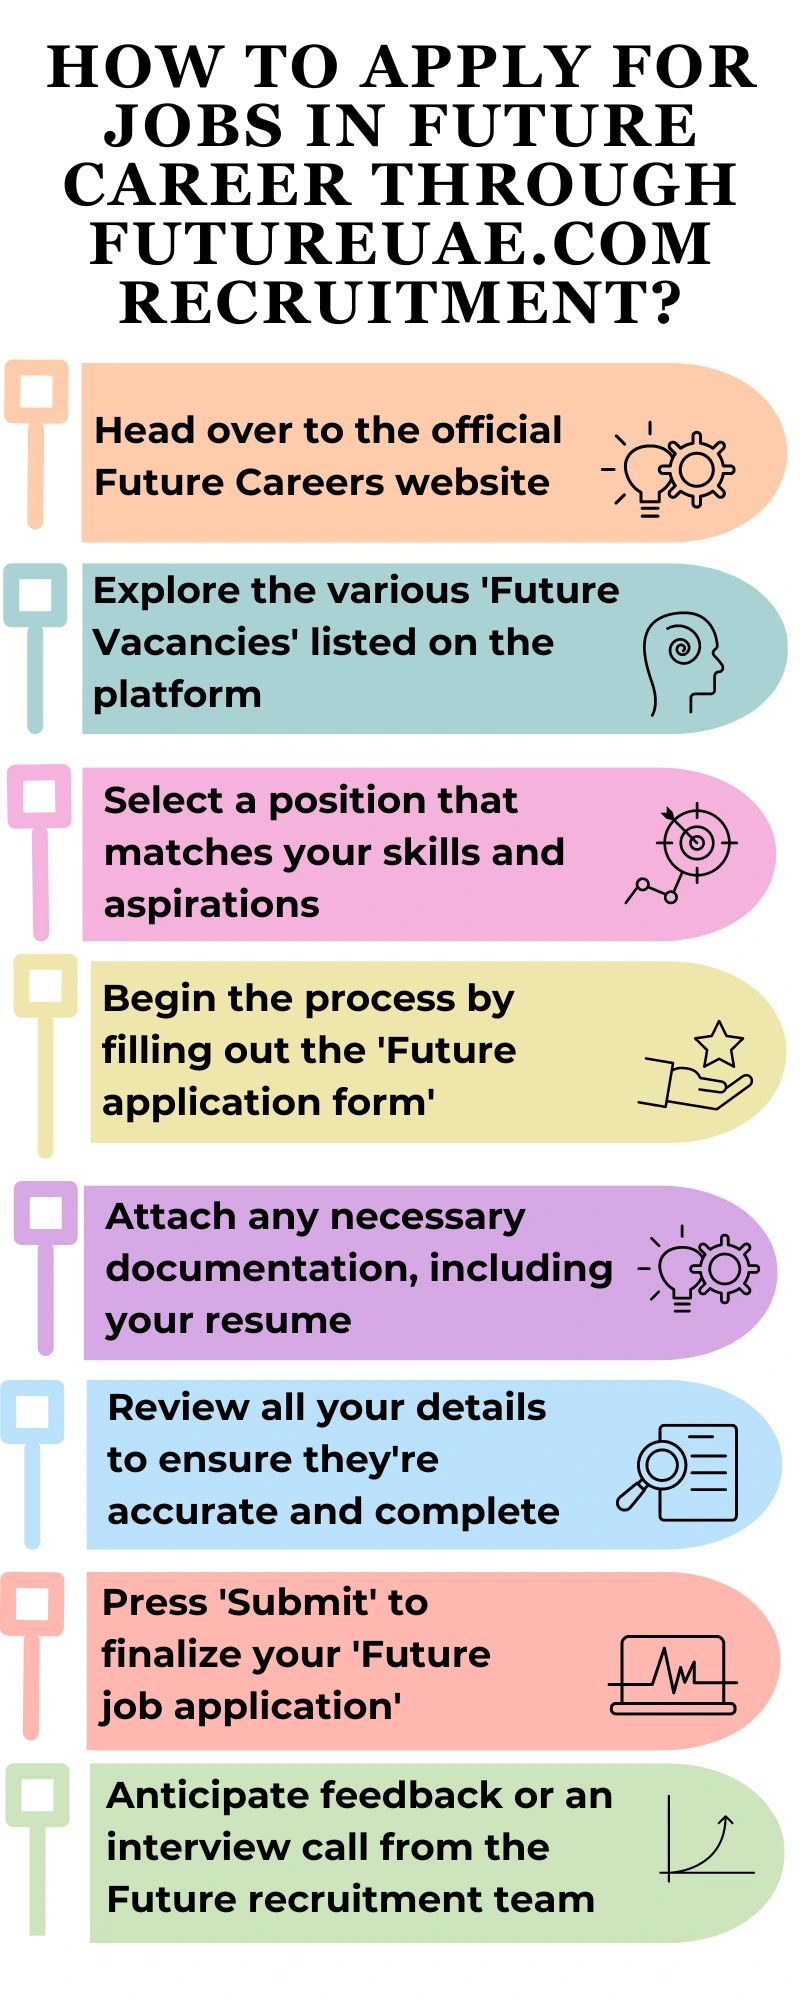 How to Apply for Jobs in Future Career through futureuae.com recruitment?